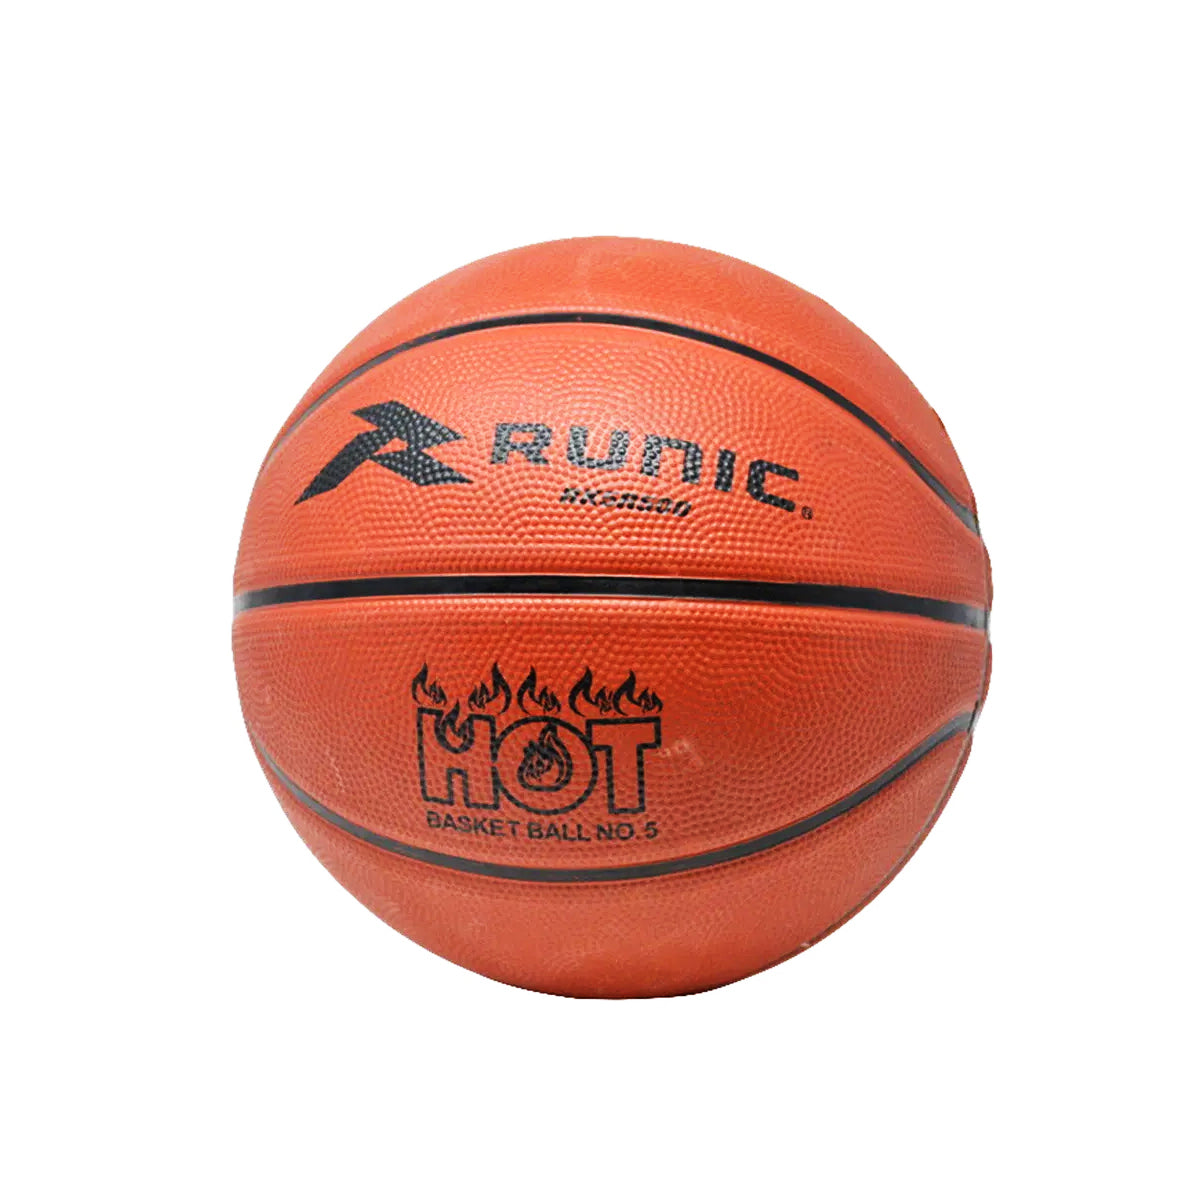 Balon Basket #5 Rubber Runic